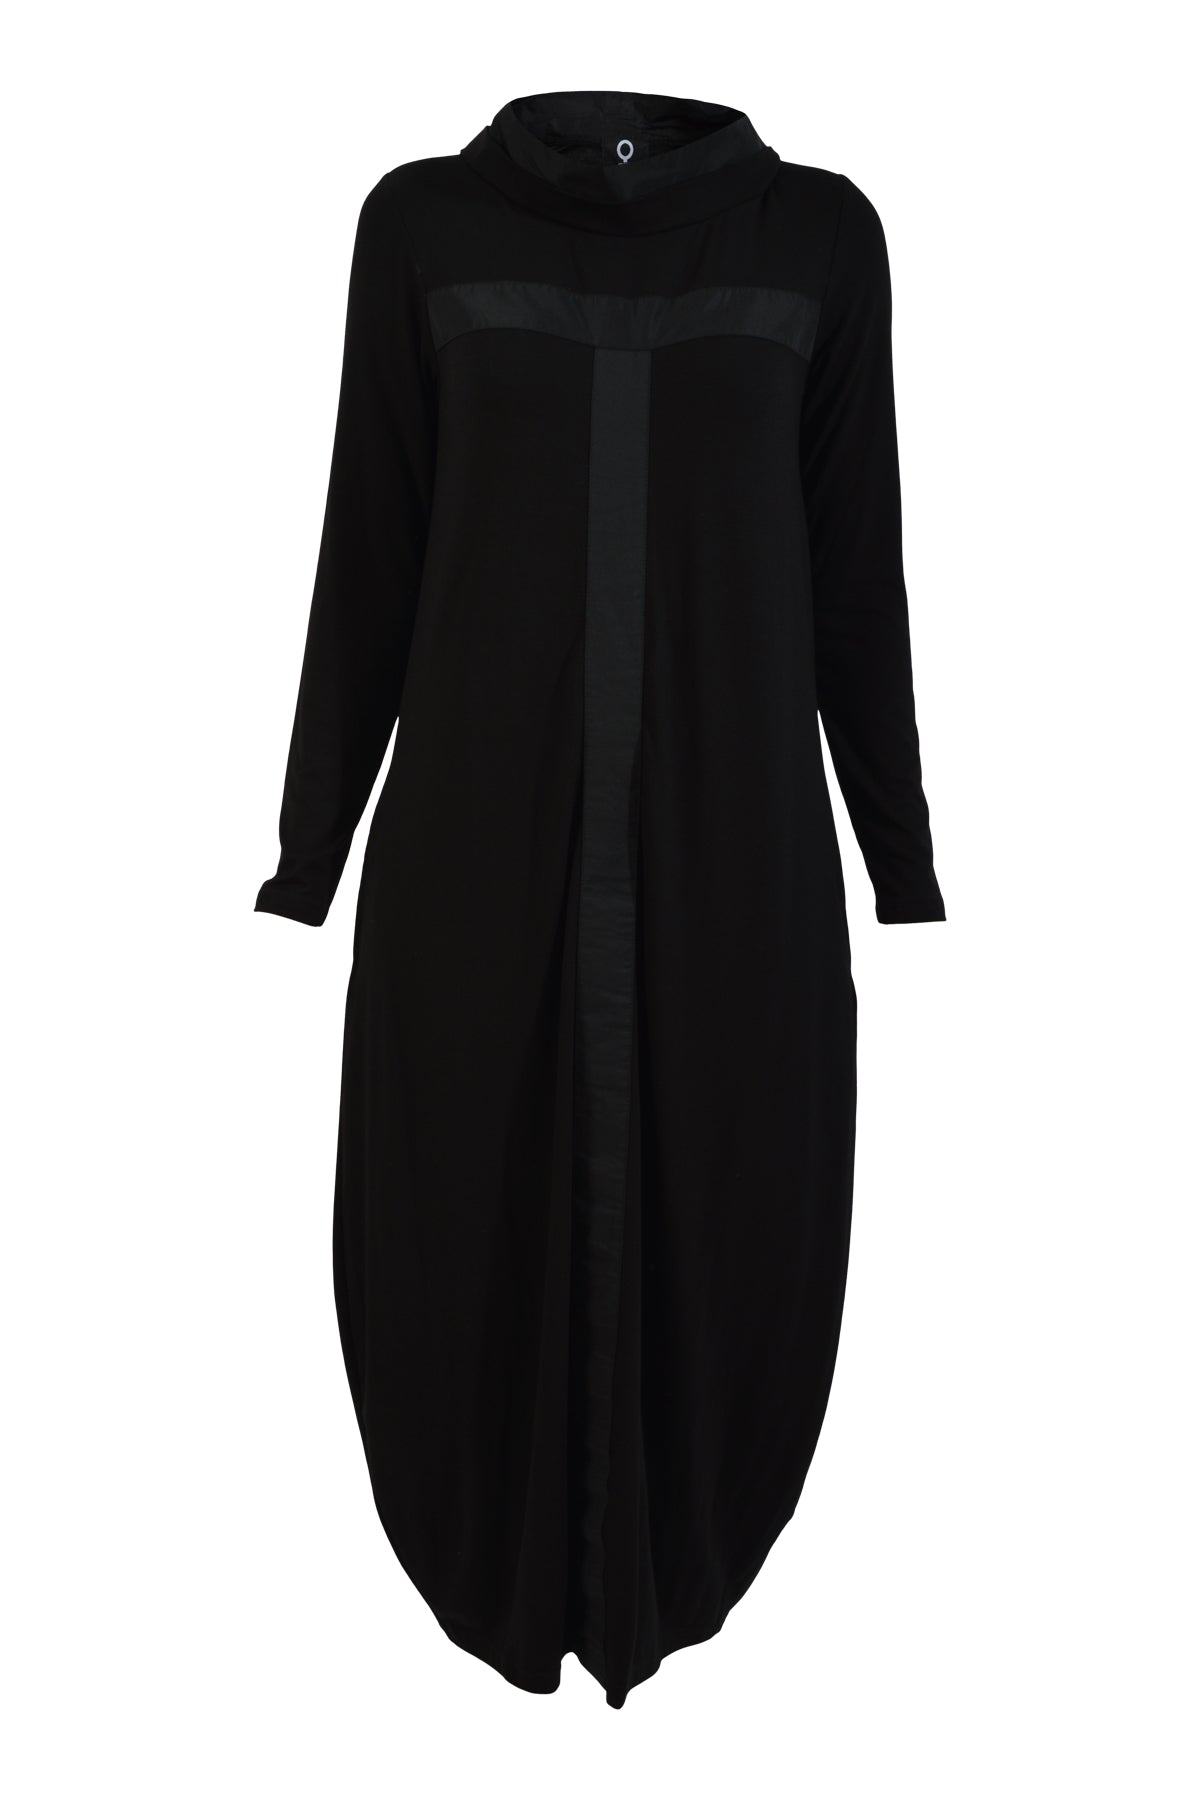 My Soul Stain Dress 5016, Black plain